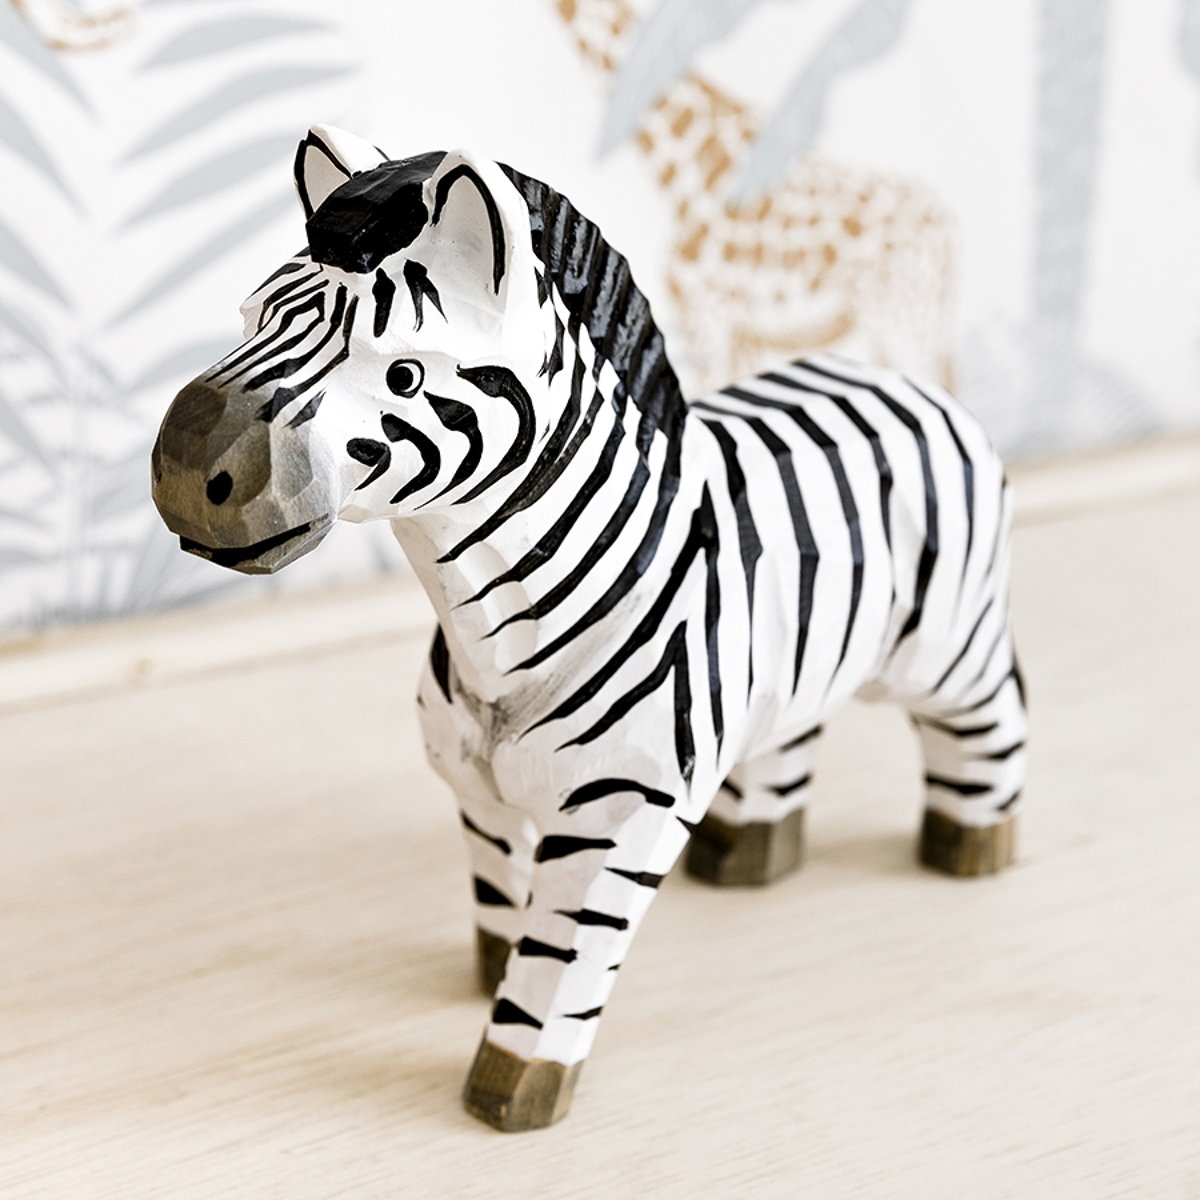 Brinquedo zebra